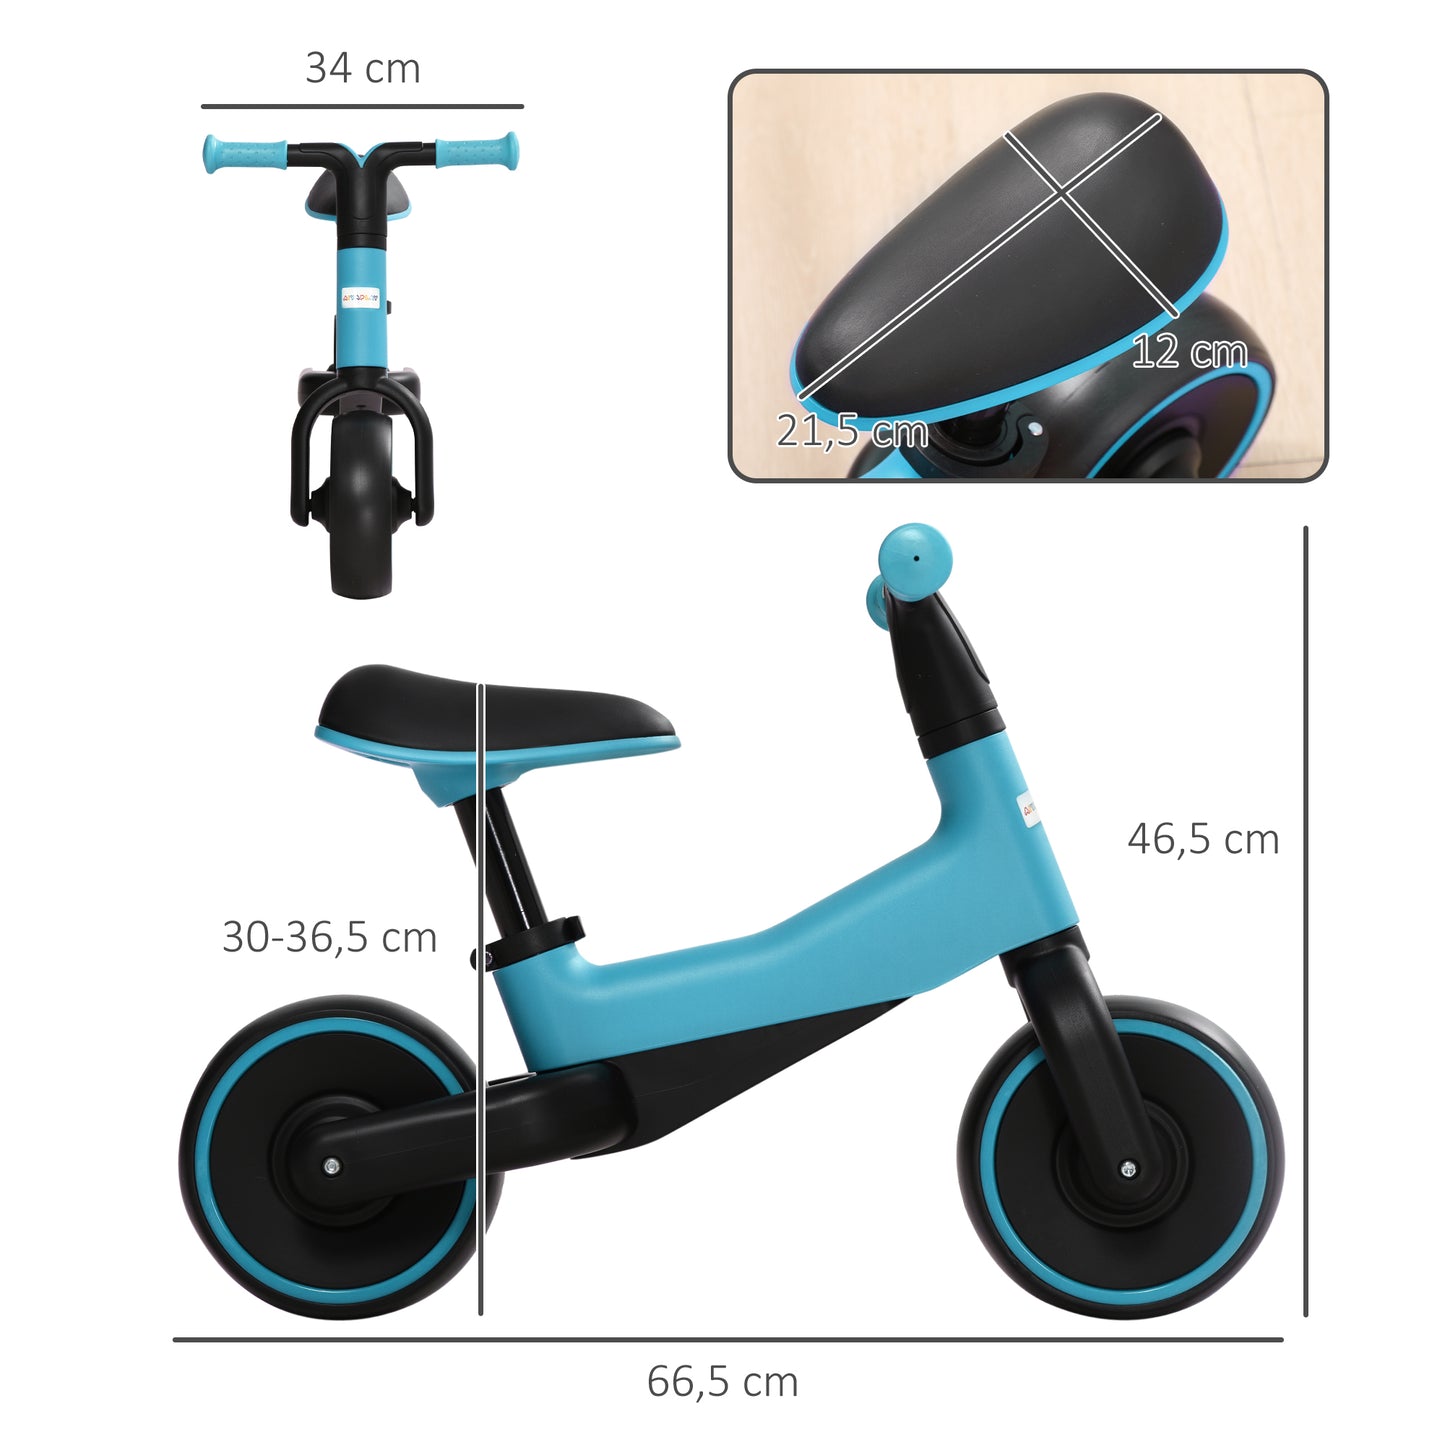 AIYAPLAY Bicicleta sin Pedales para Niños de +18 Meses Triciclo Infantil para Bebé con Sillín Ajustable en 30-36,5 cm Ruedas de Ø19 cm Carga 25 kg 66,5x34x46,5 cm Azul